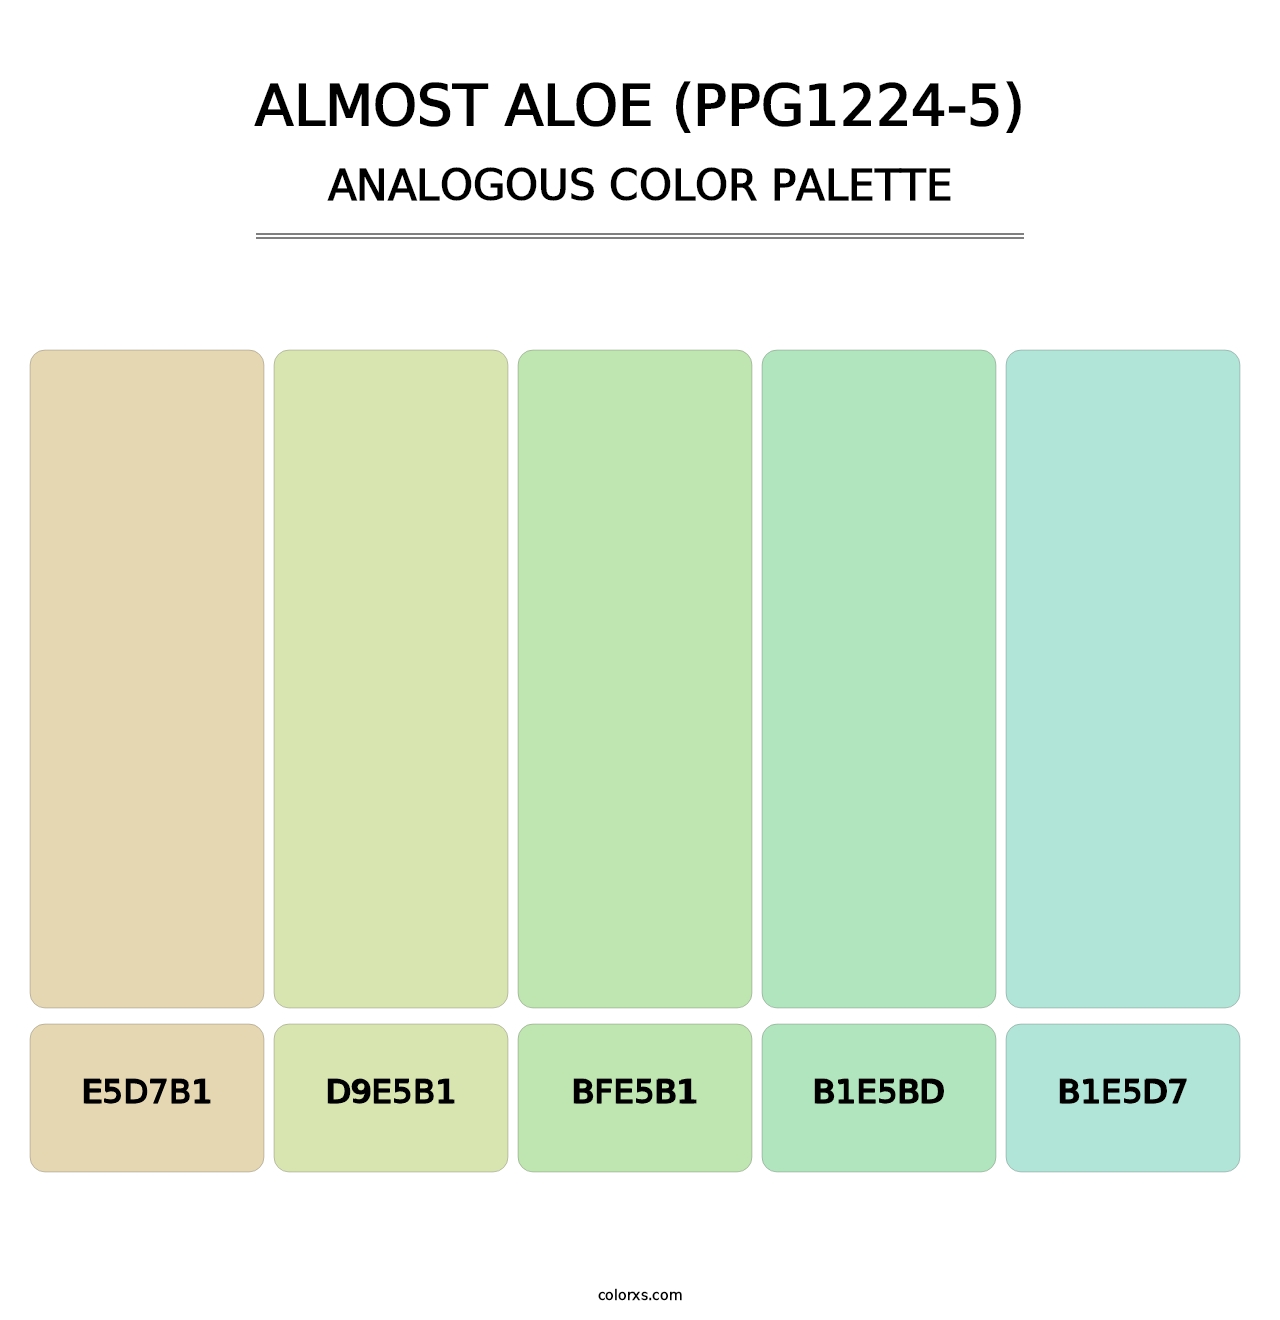 Almost Aloe (PPG1224-5) - Analogous Color Palette